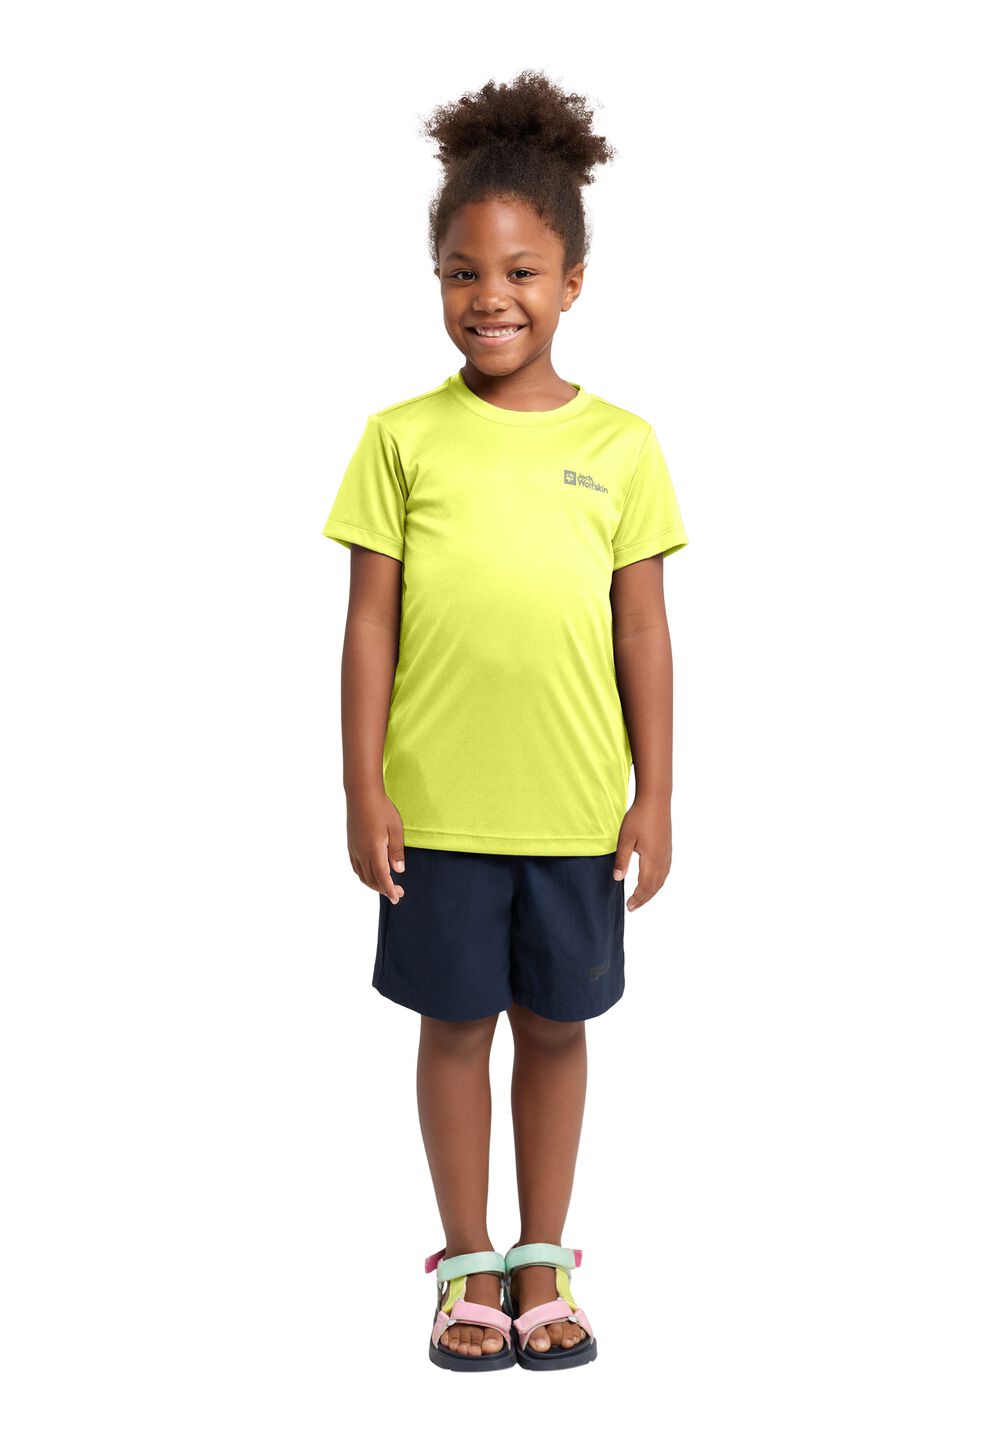 Jack Wolfskin Active Solid T-Shirt Kids Functioneel shirt Kinderen 152 oranje firefly